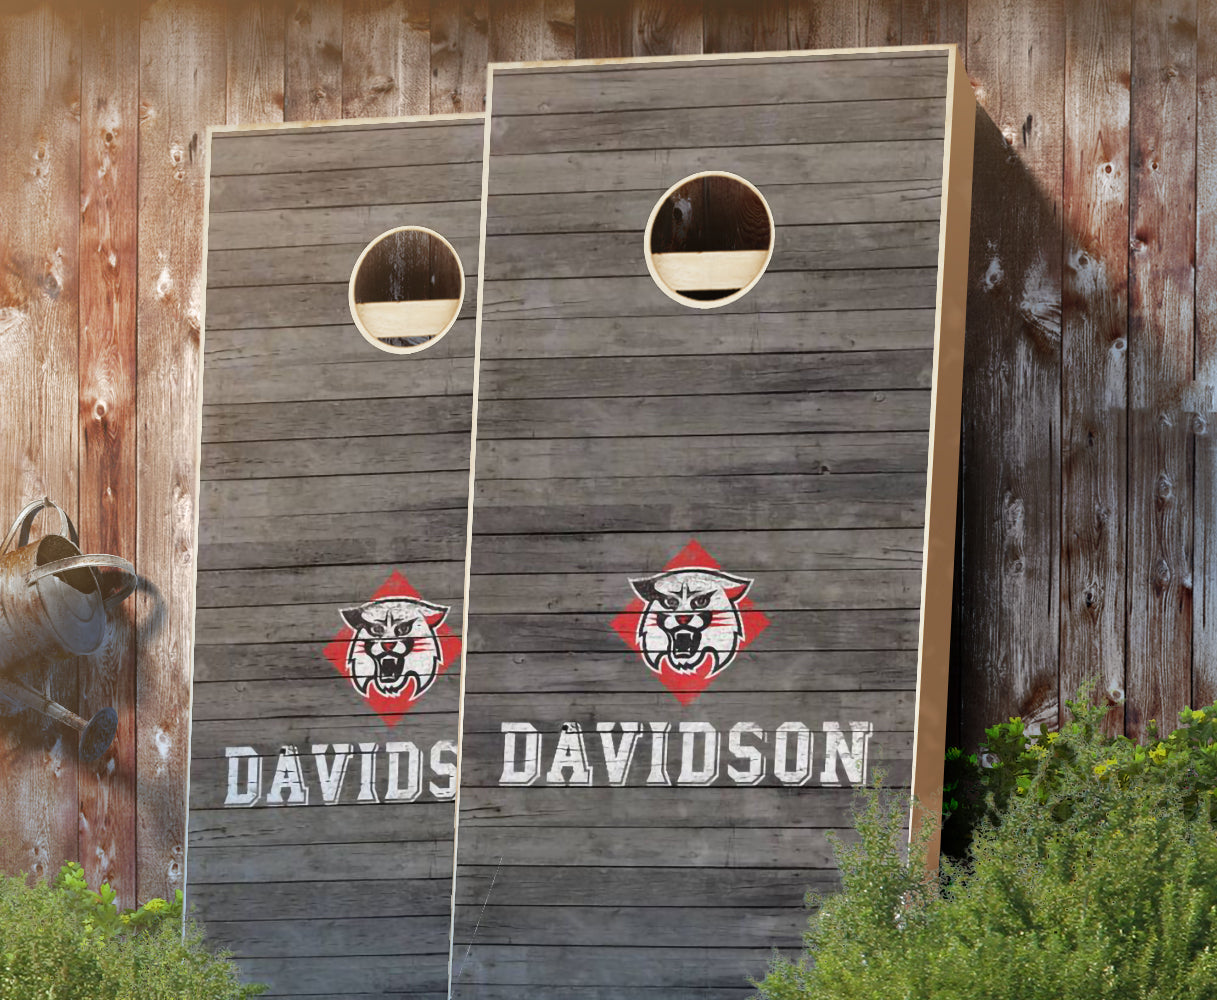 "Davidson Distressed" Cornhole Boards